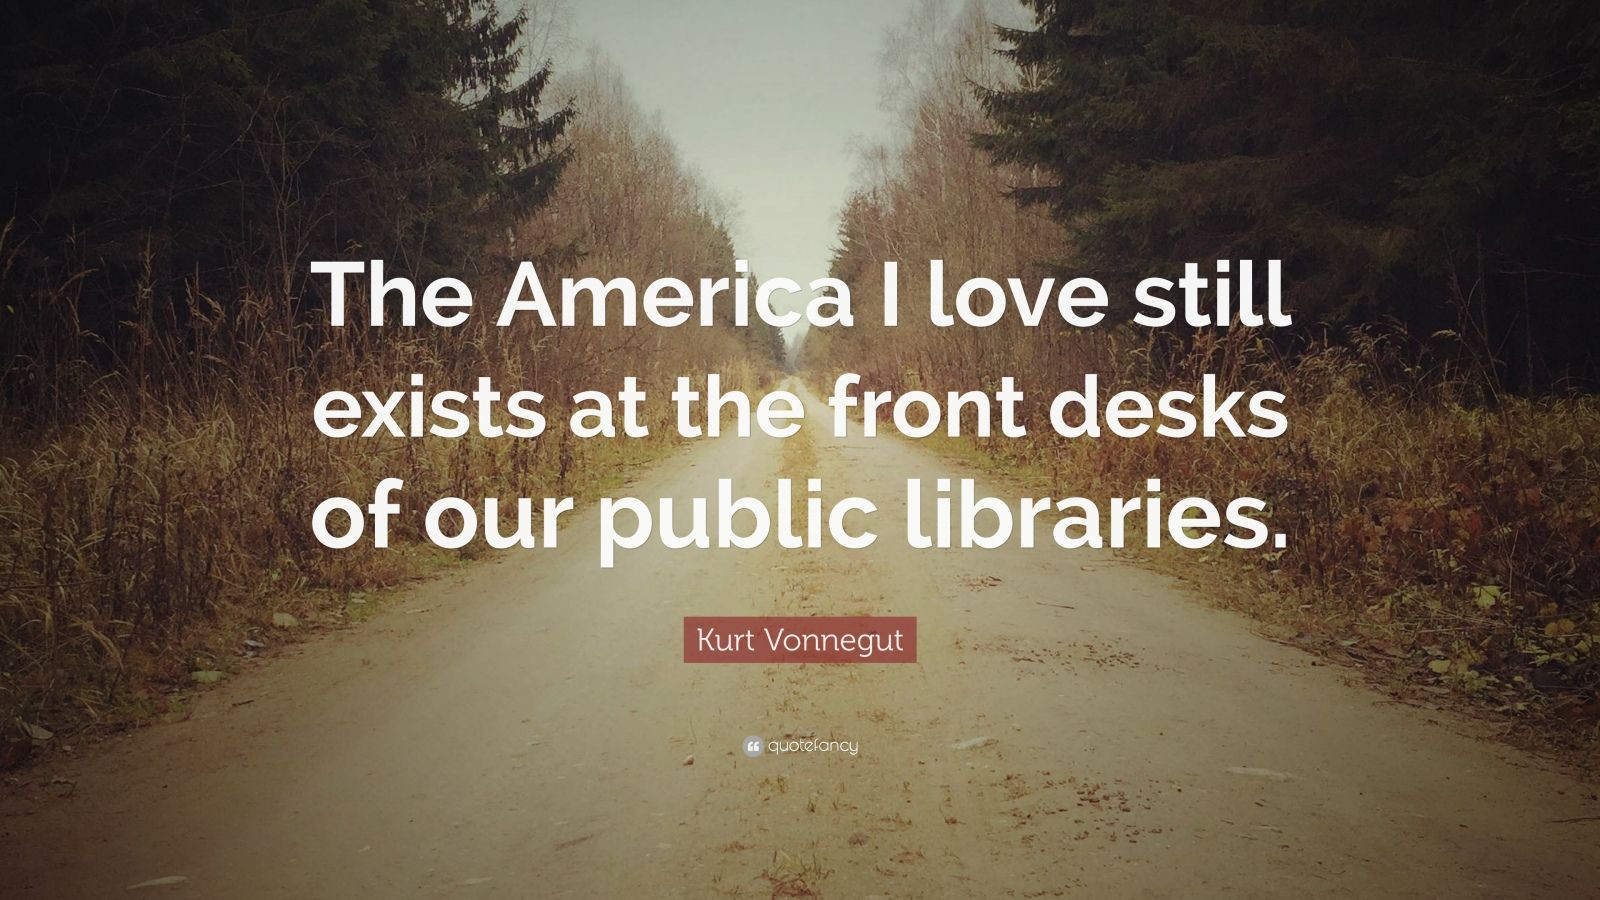 Kurt Vonnegut Quotes Love
 Kurt Vonnegut Quote “The America I love still exists at